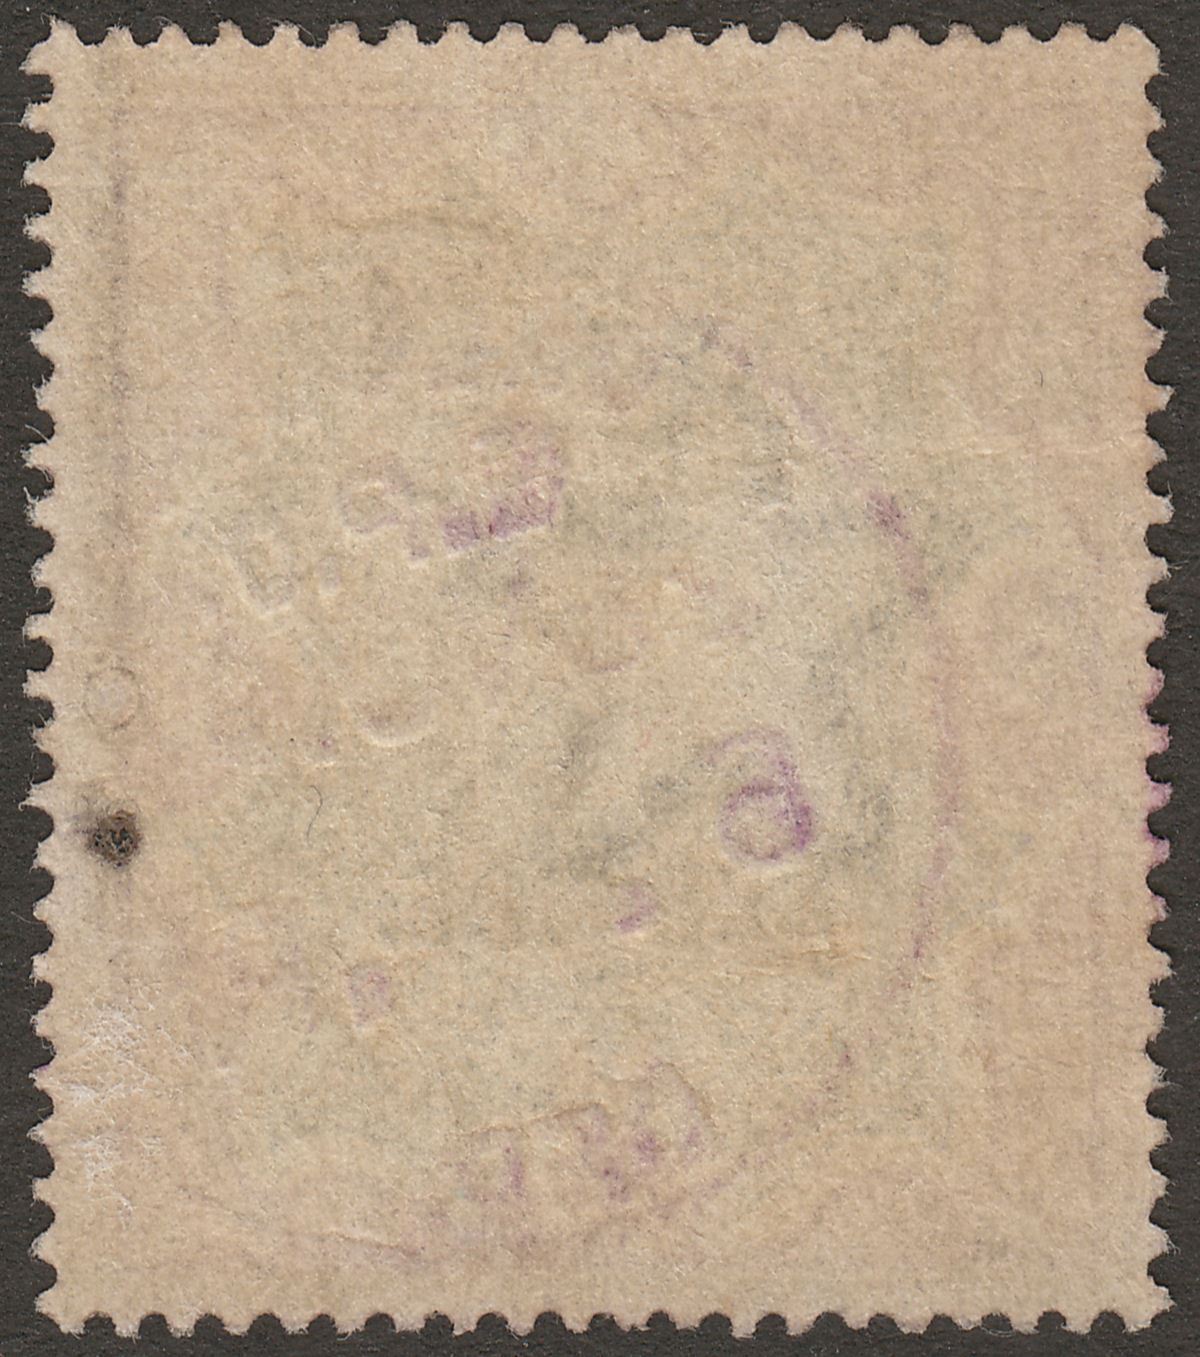 India 1895 QV Revenue Postal Service Overprint 5r Ultramarine and Violet Used